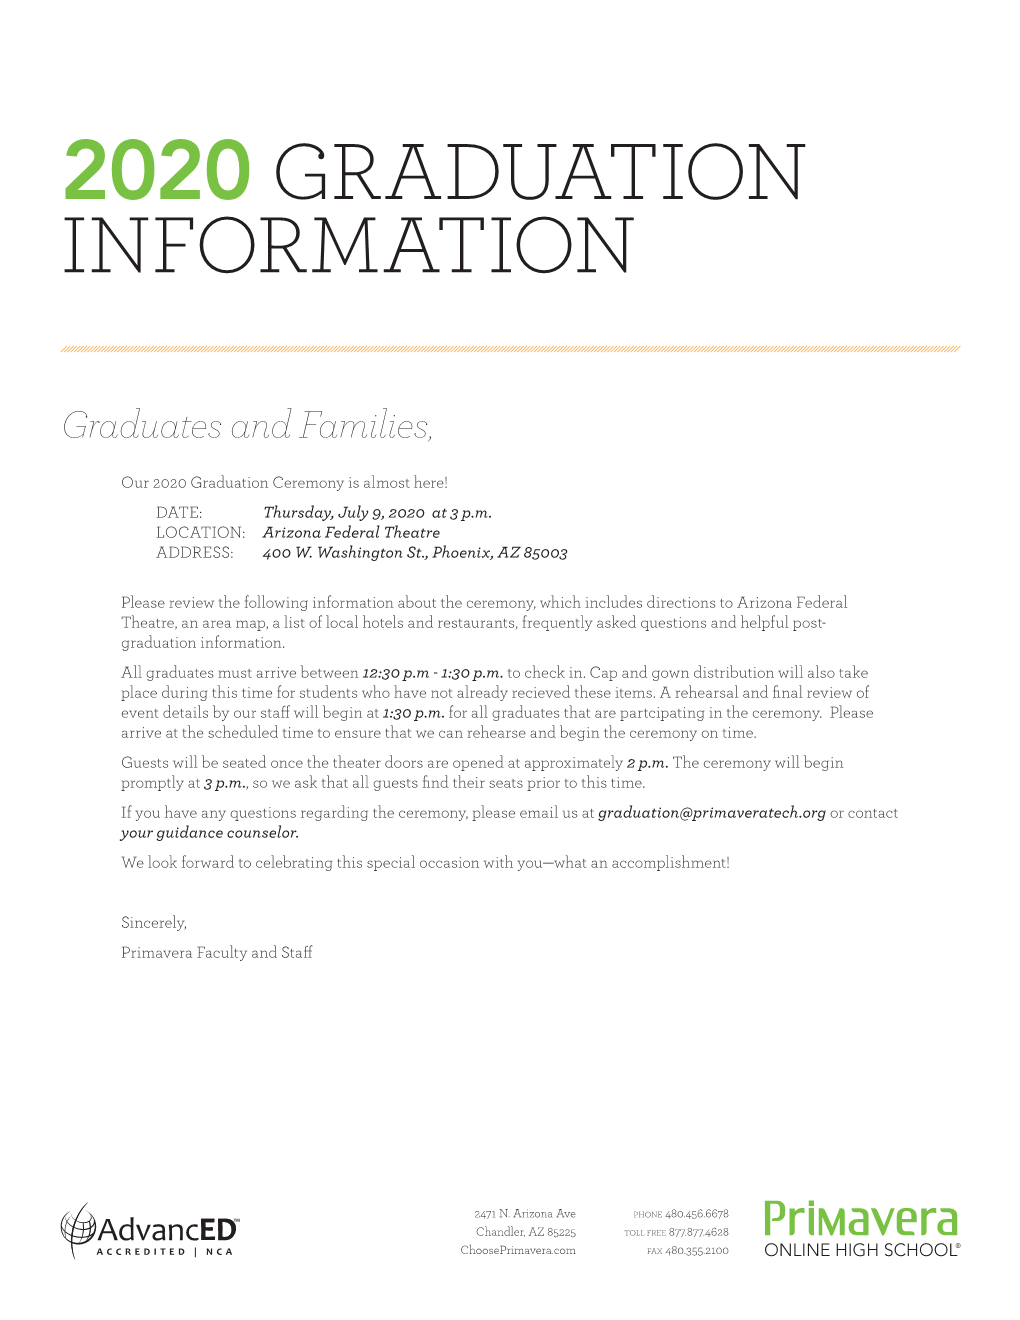 2020 Graduation Information